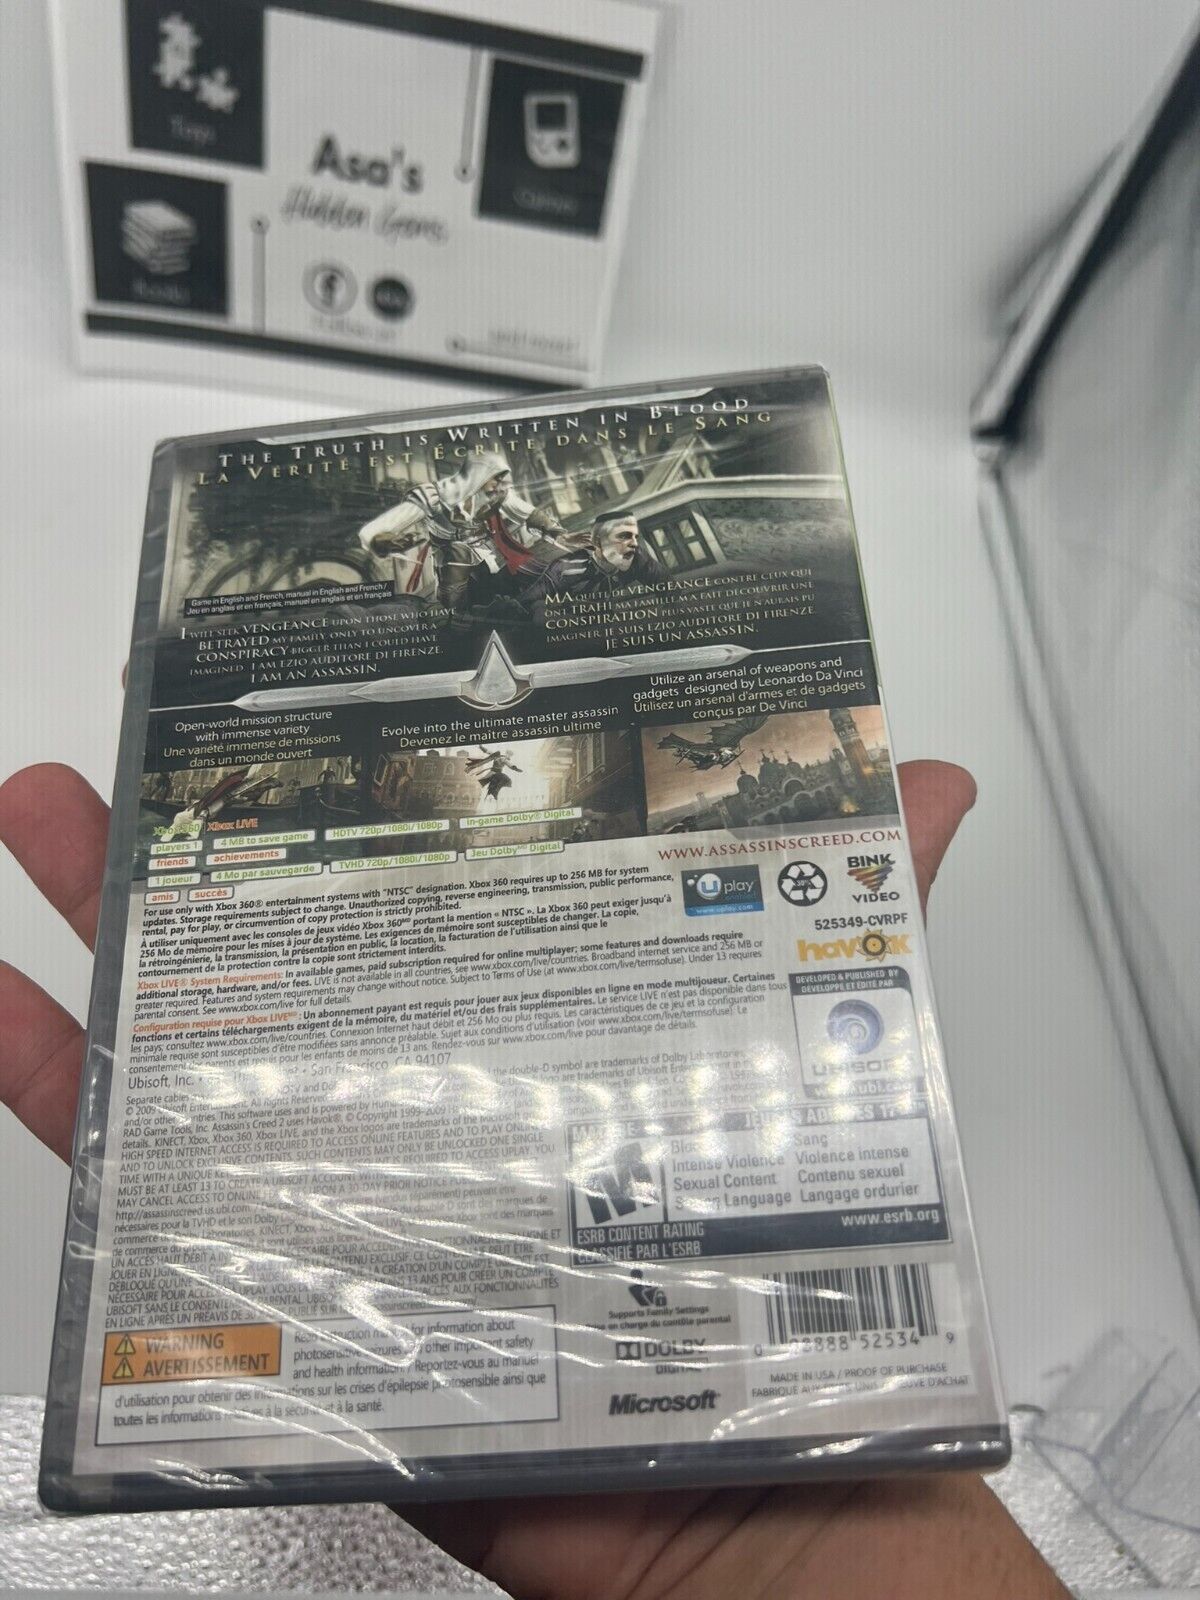 NEW Assassin's Creed II 2 (Microsoft Xbox 360, 2009) Sealed